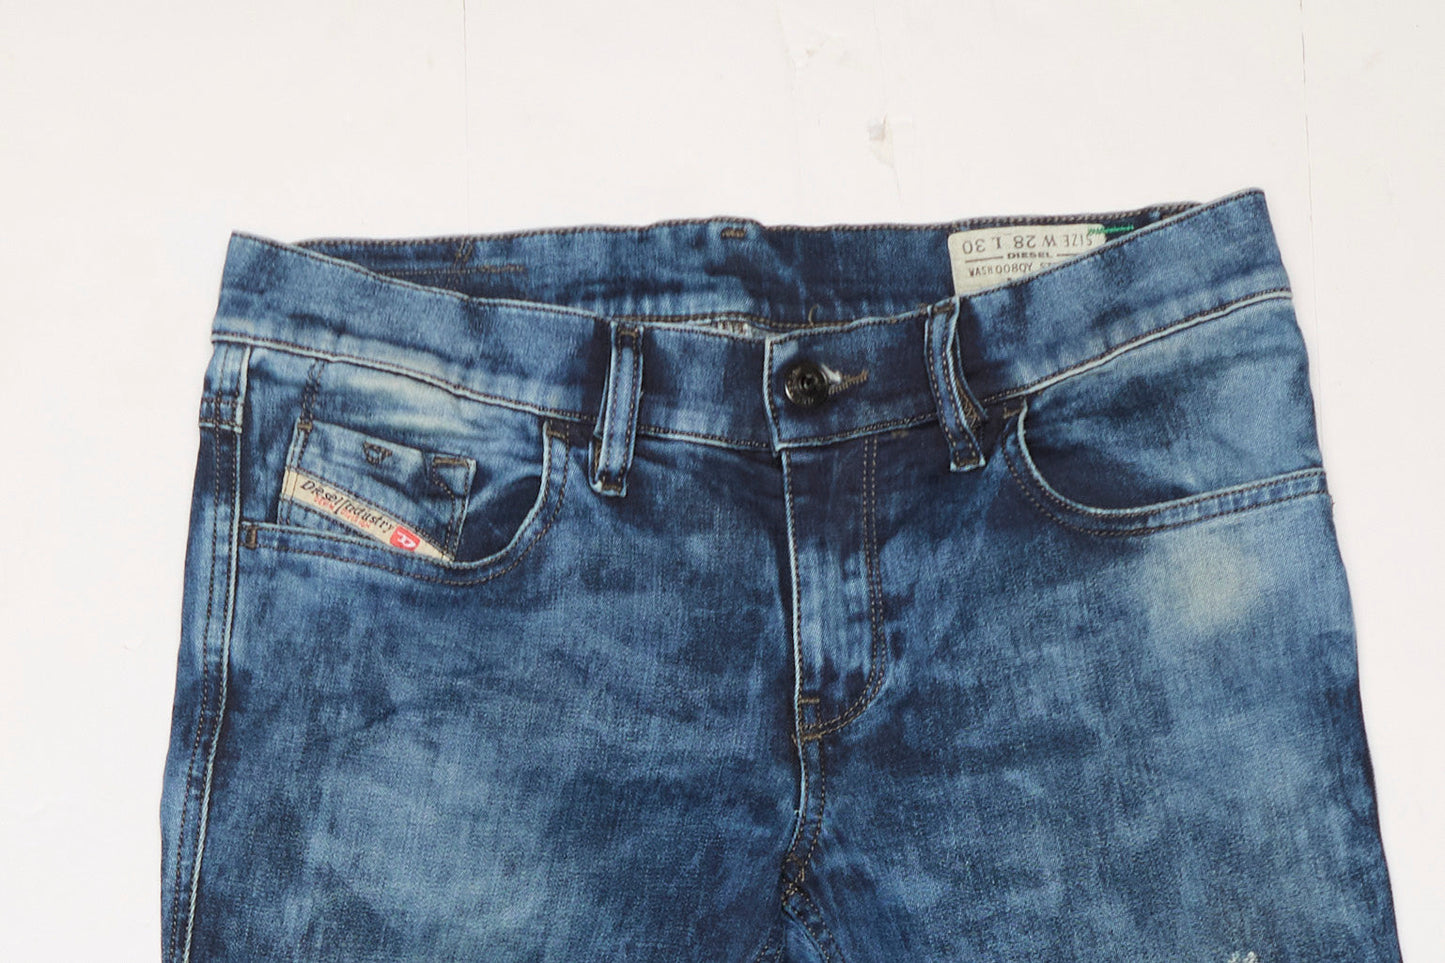 Levis Distressed Jeans - W28" L30"